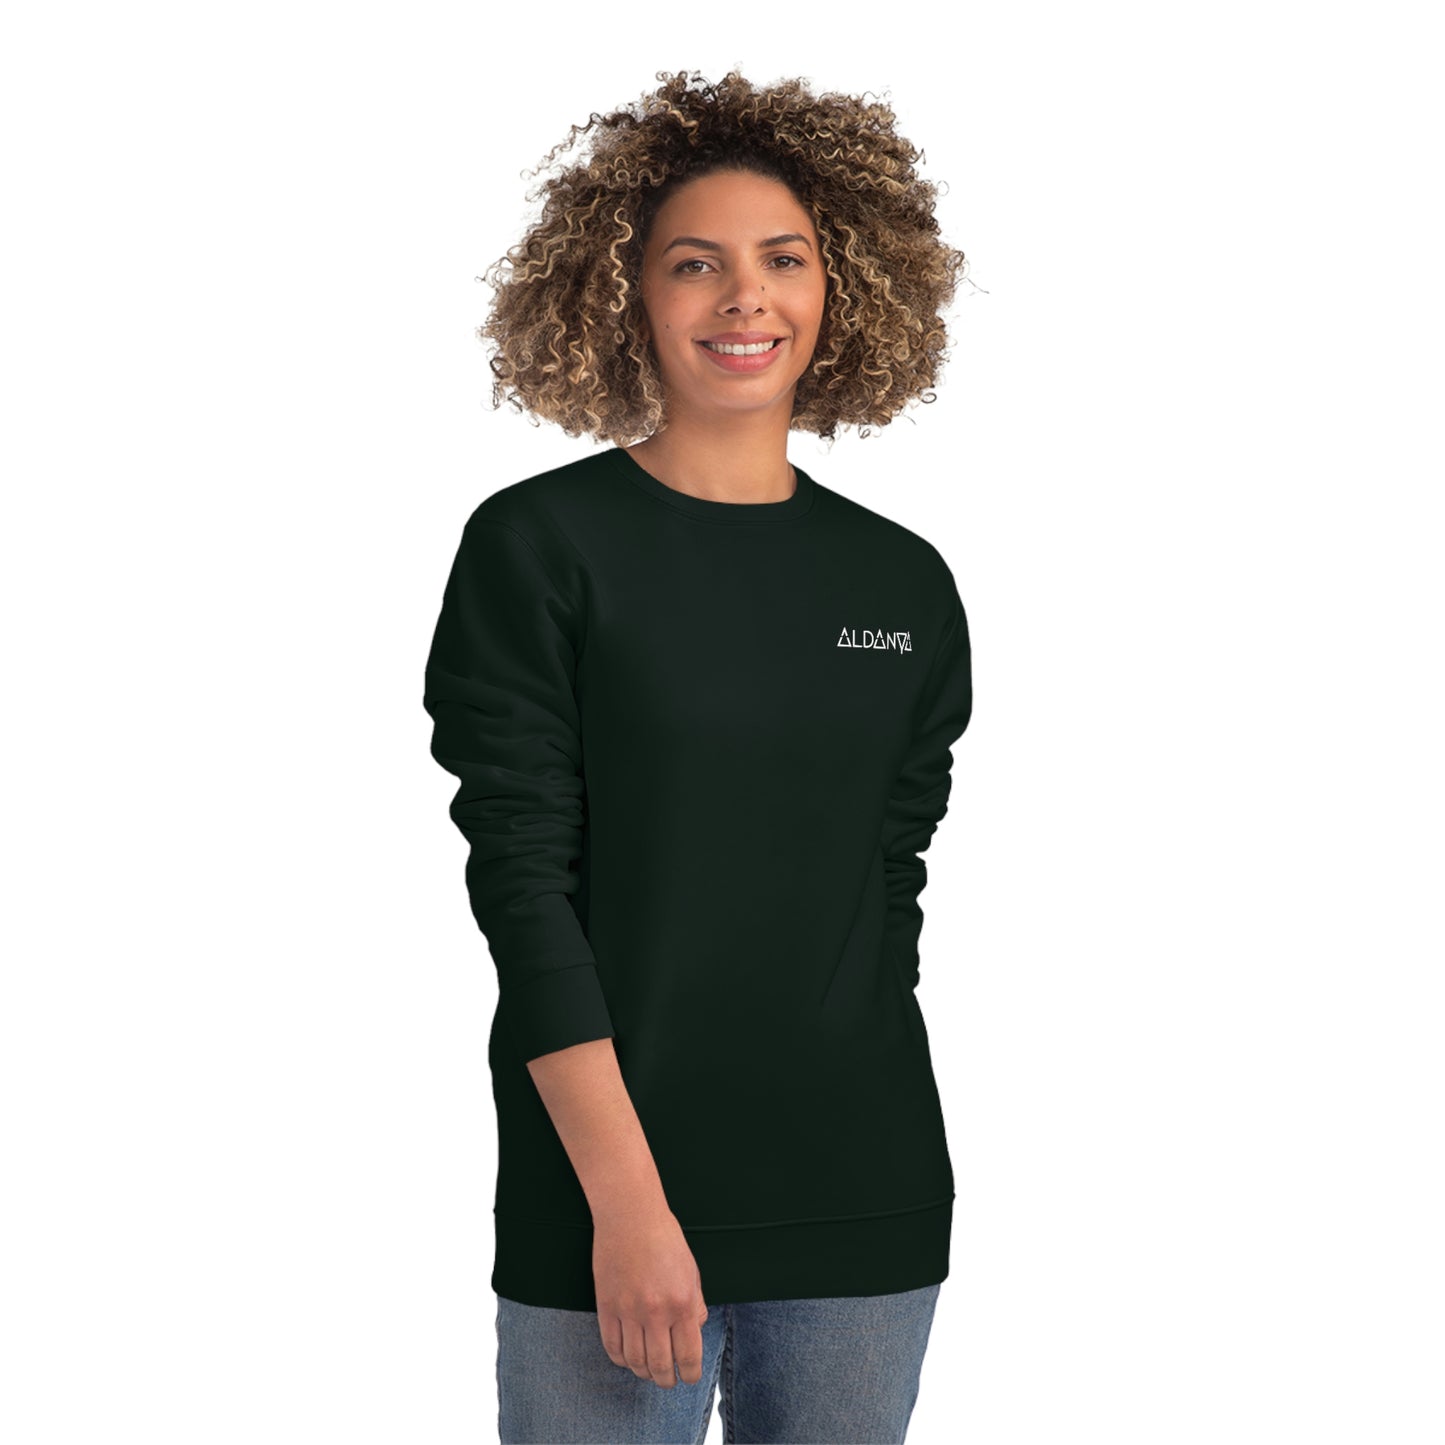 ALDANYA - Techno Exploration | Unisex Sweatshirt, Back Print